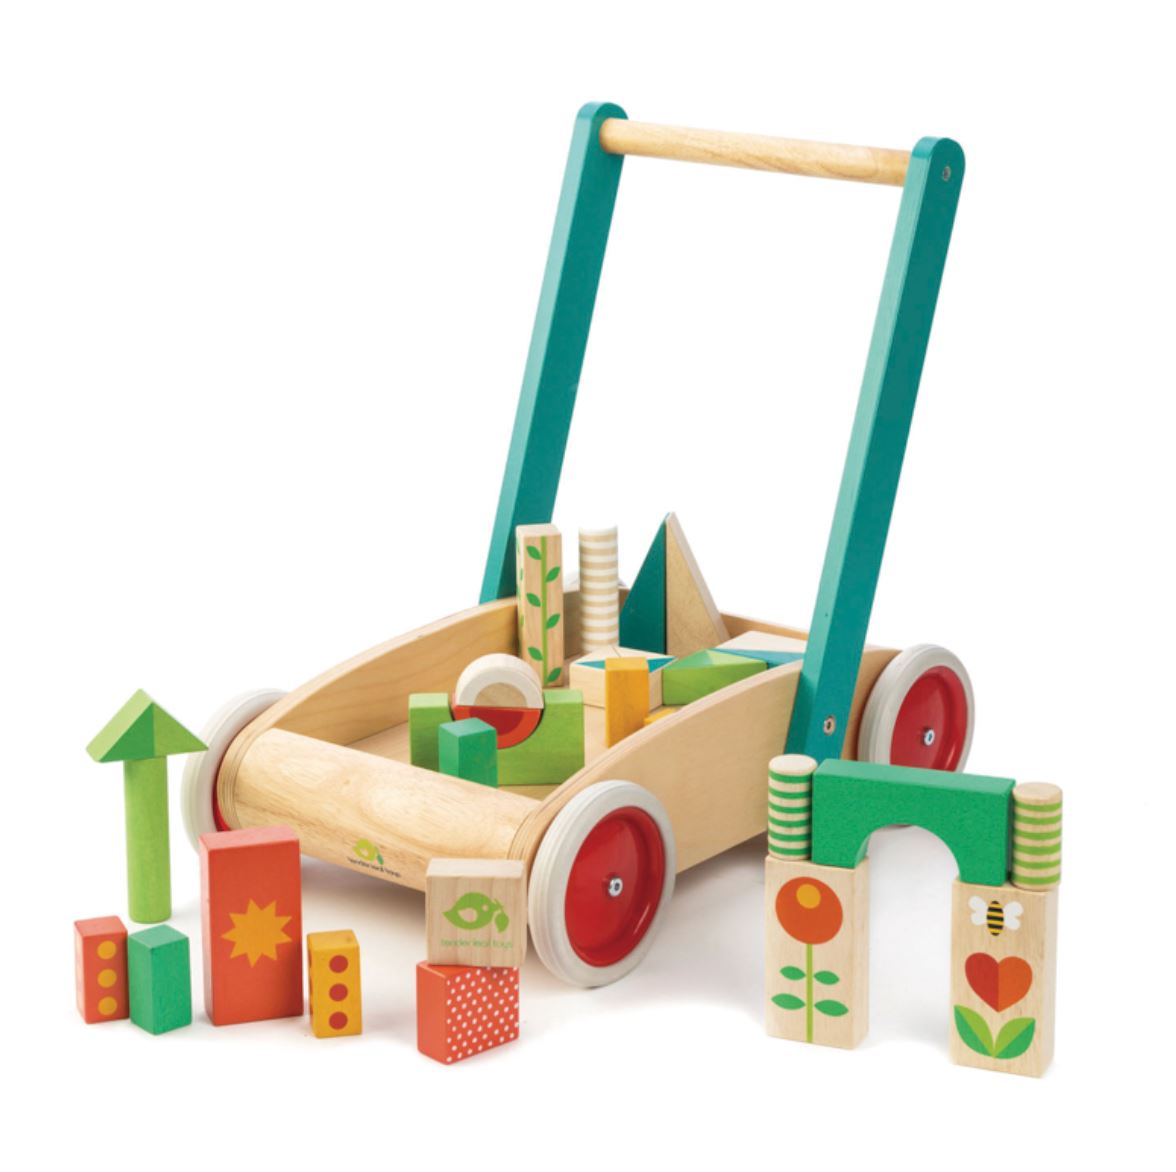 Tender Leaf Toys Wagon With Blocks Wooden Toy Tender Leaf Toys 